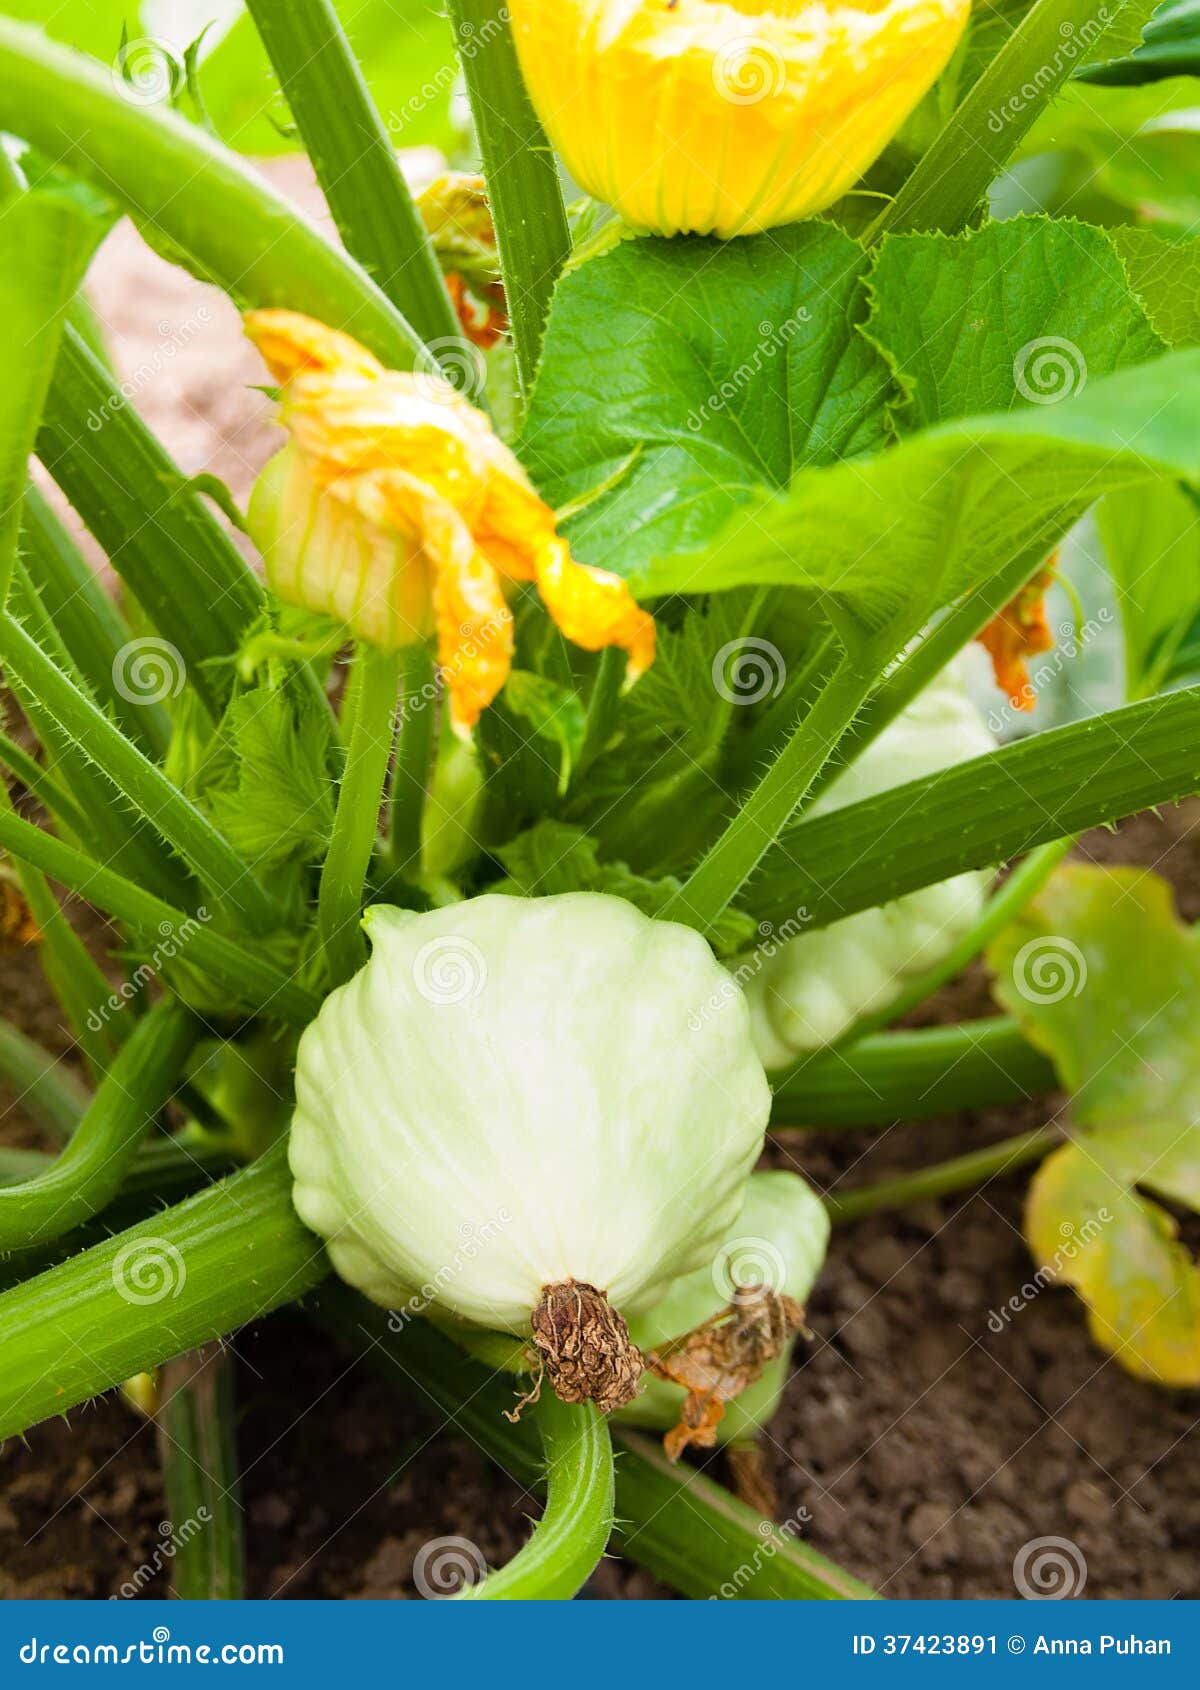 pattypan squash growing on vegetable bed. custard marrow - a plant belonging to the genus cucurbita